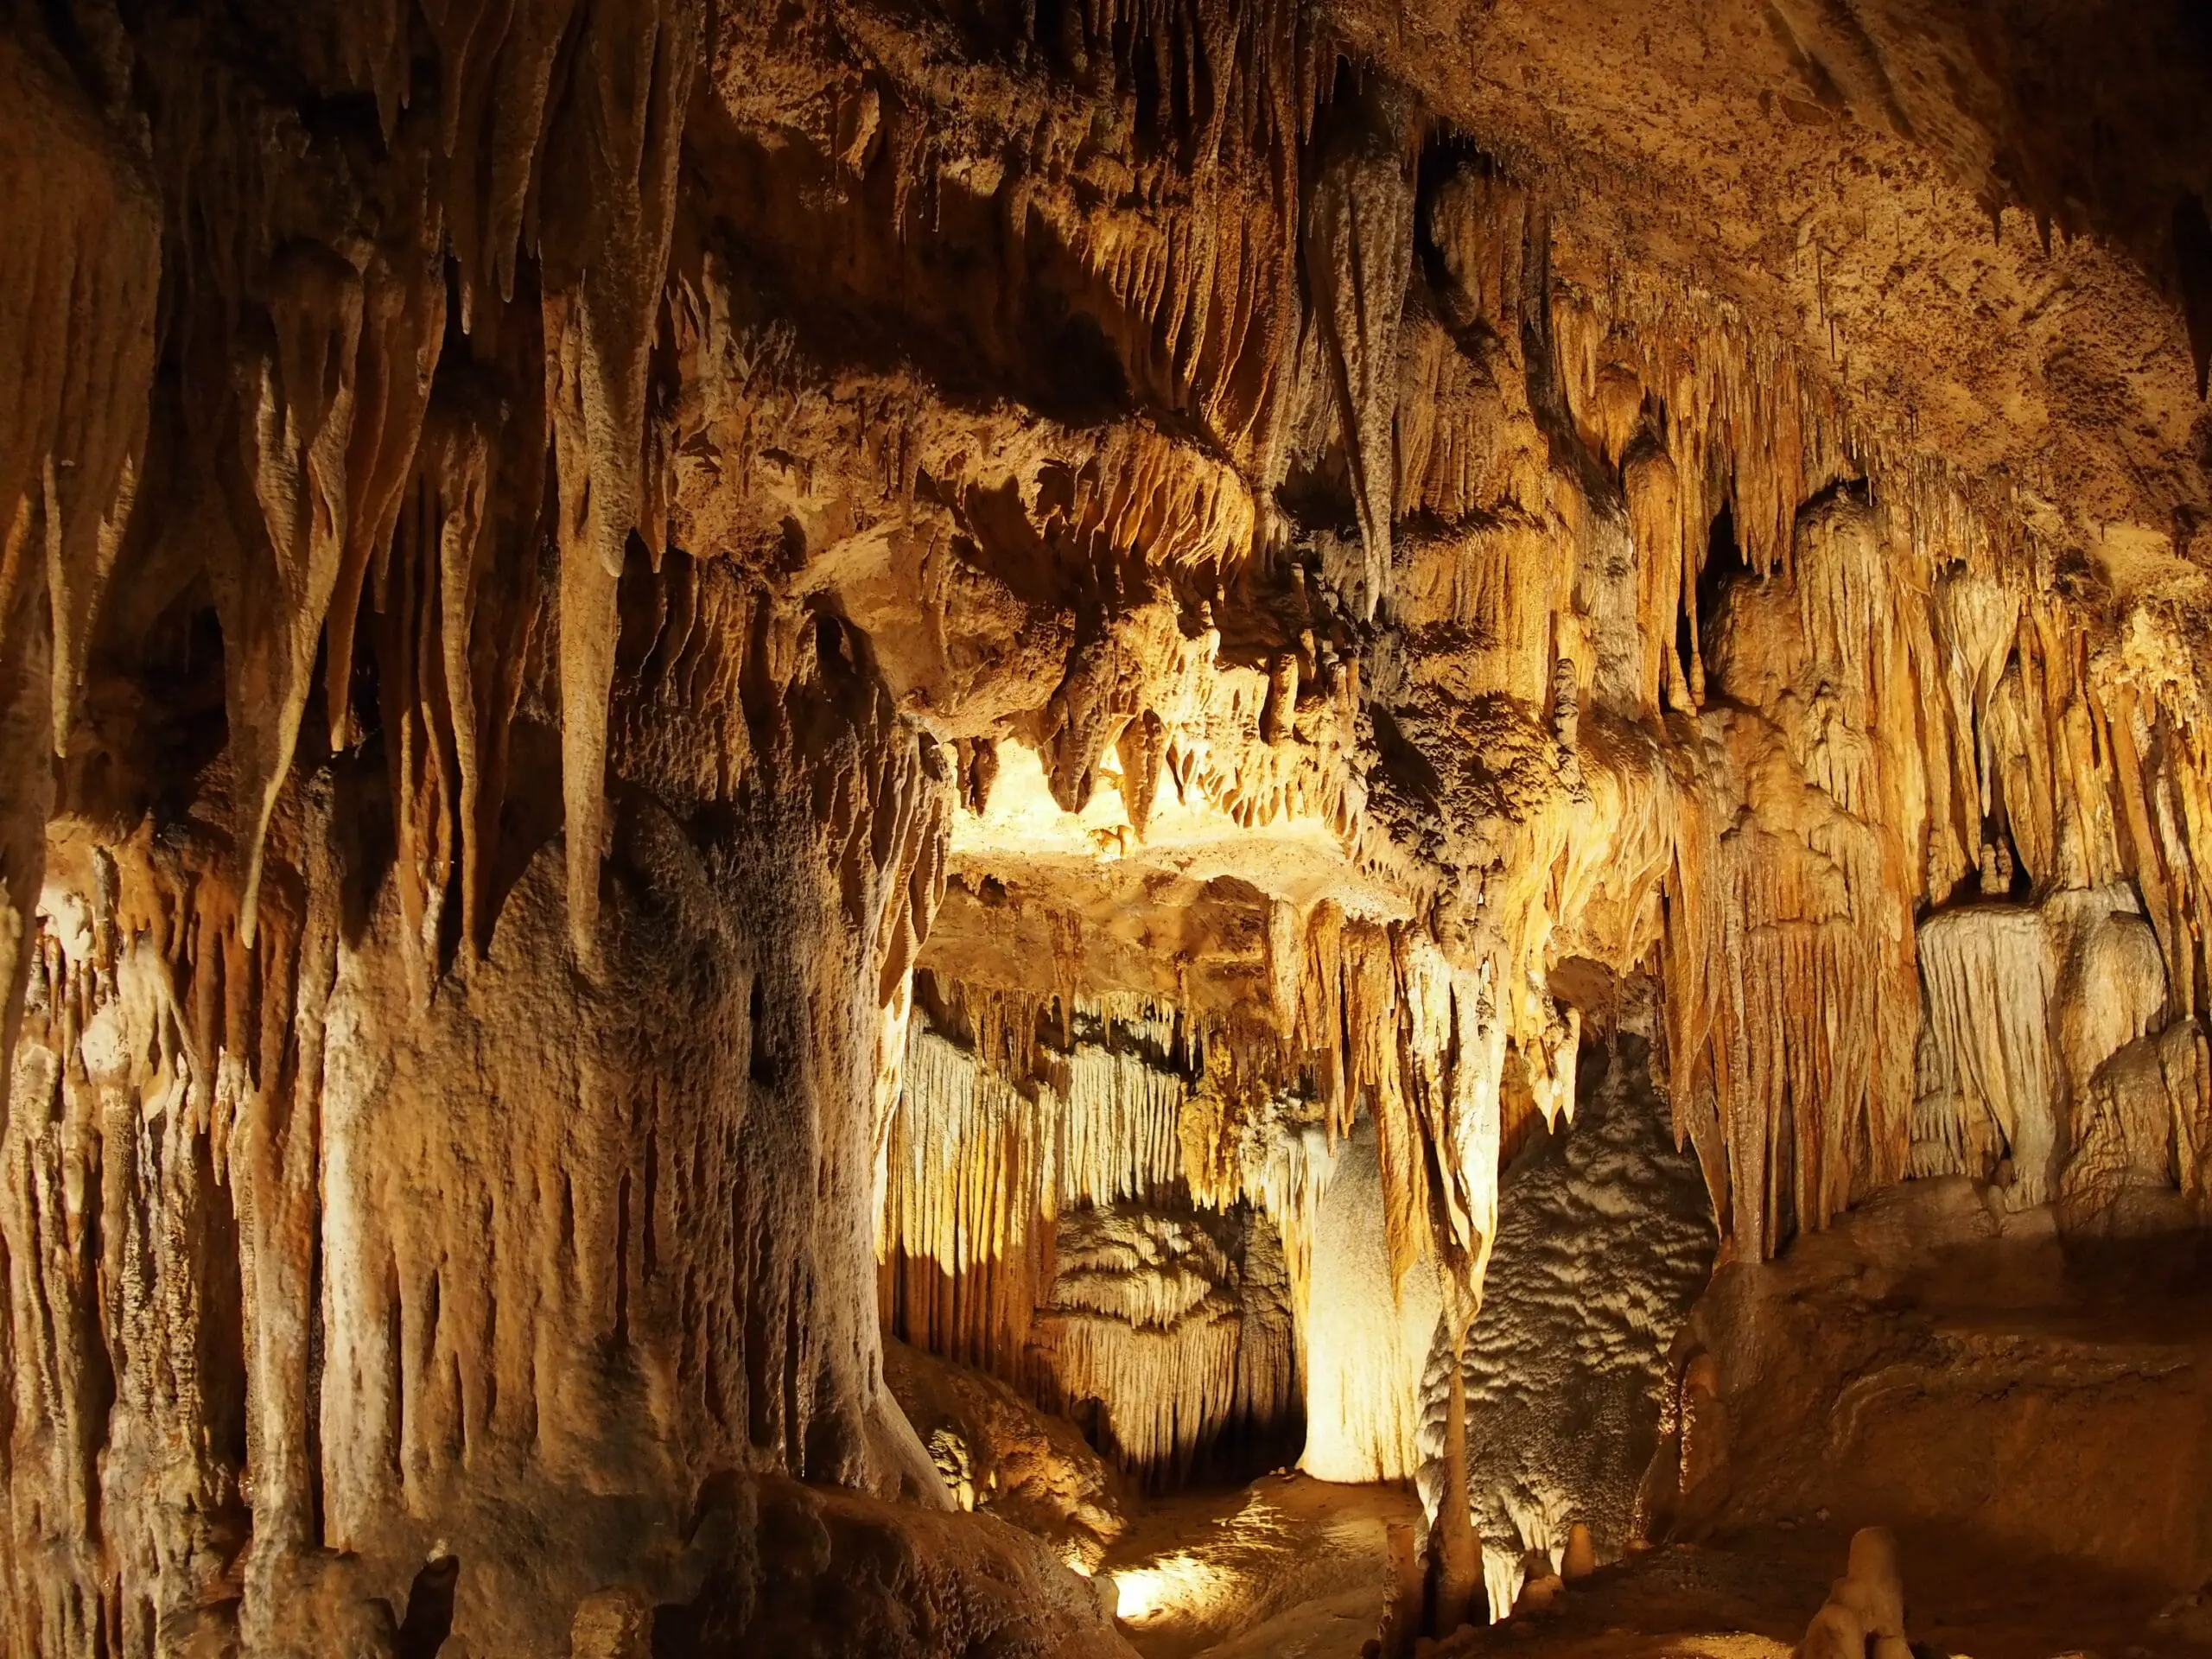 Stalactites and stalagmites inside a natural limestone cavern